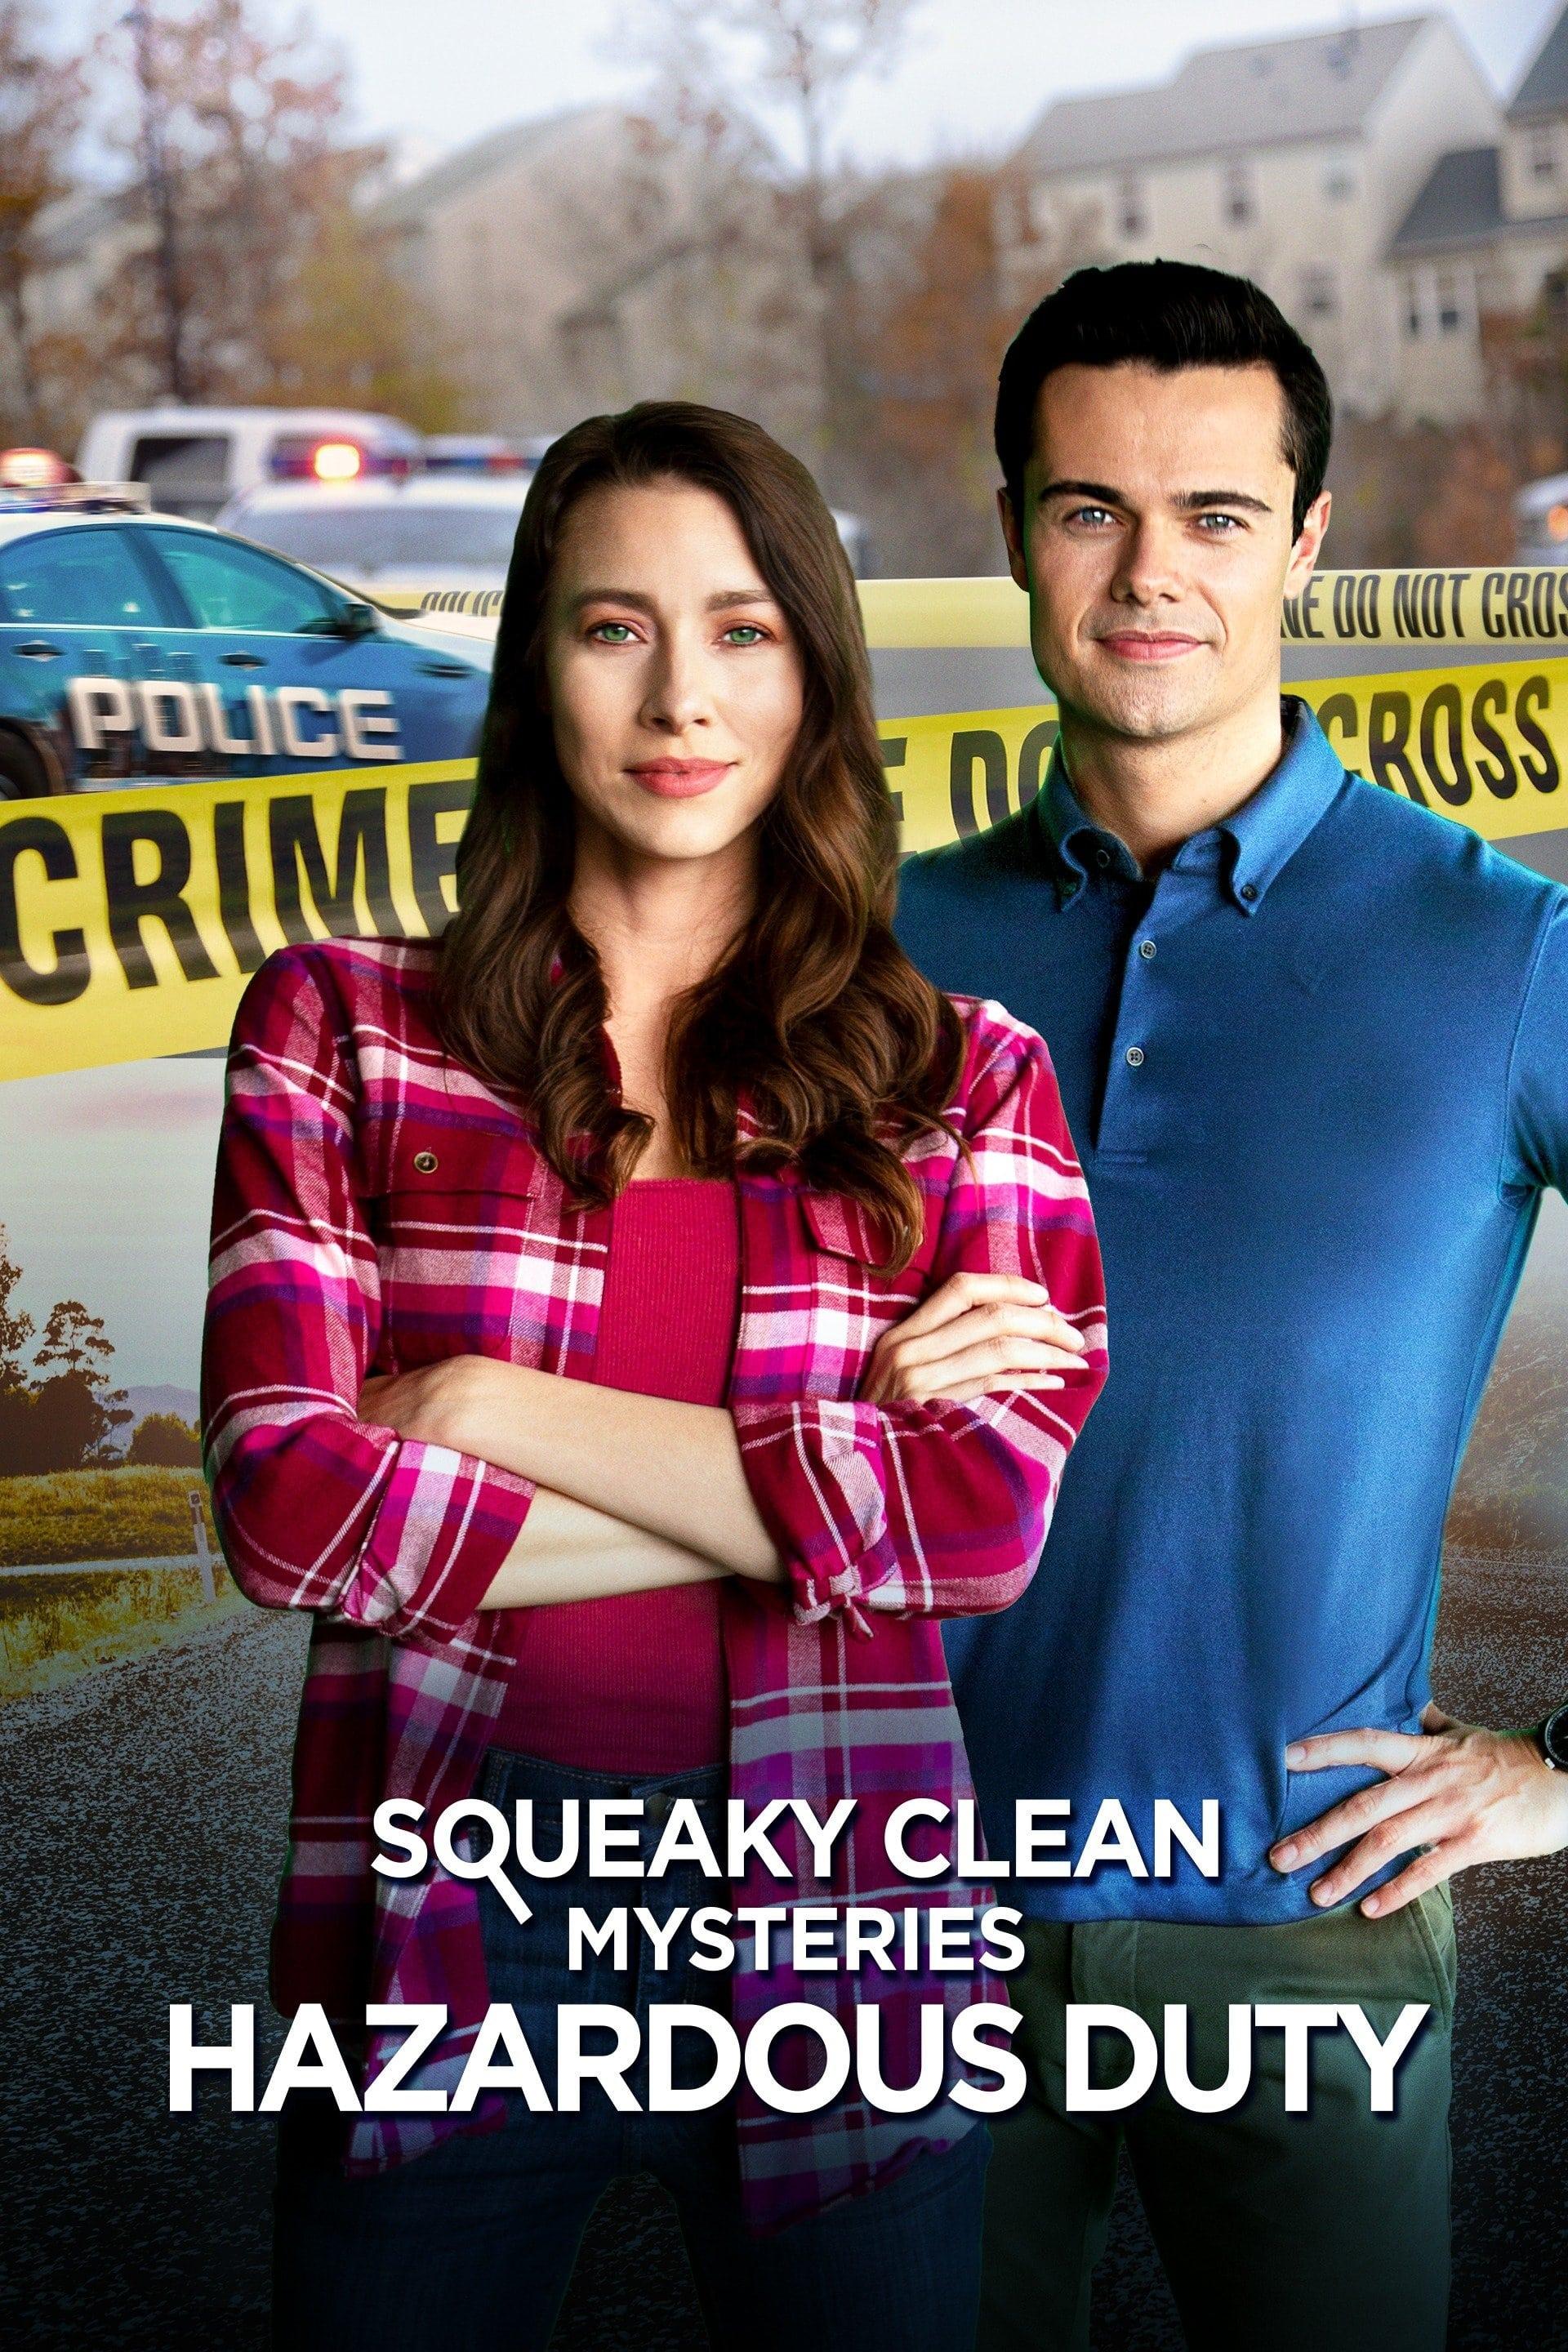 Squeaky Clean Mysteries: Hazardous Duty poster